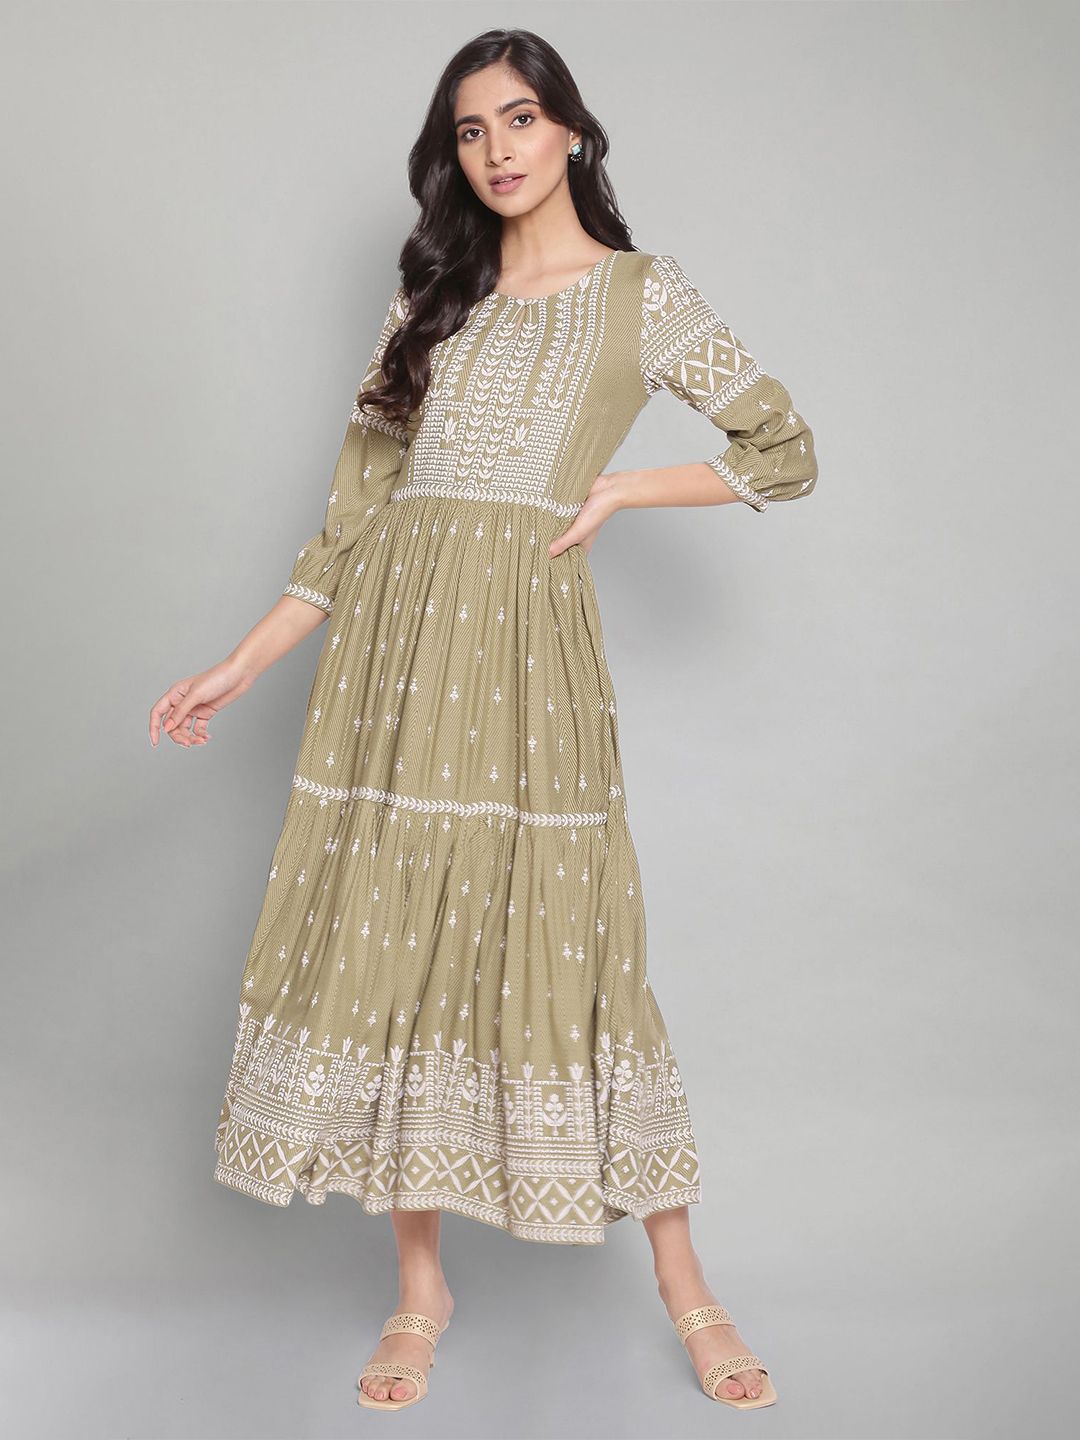 W Green Ethnic Motifs A-Line Midi Dress Price in India